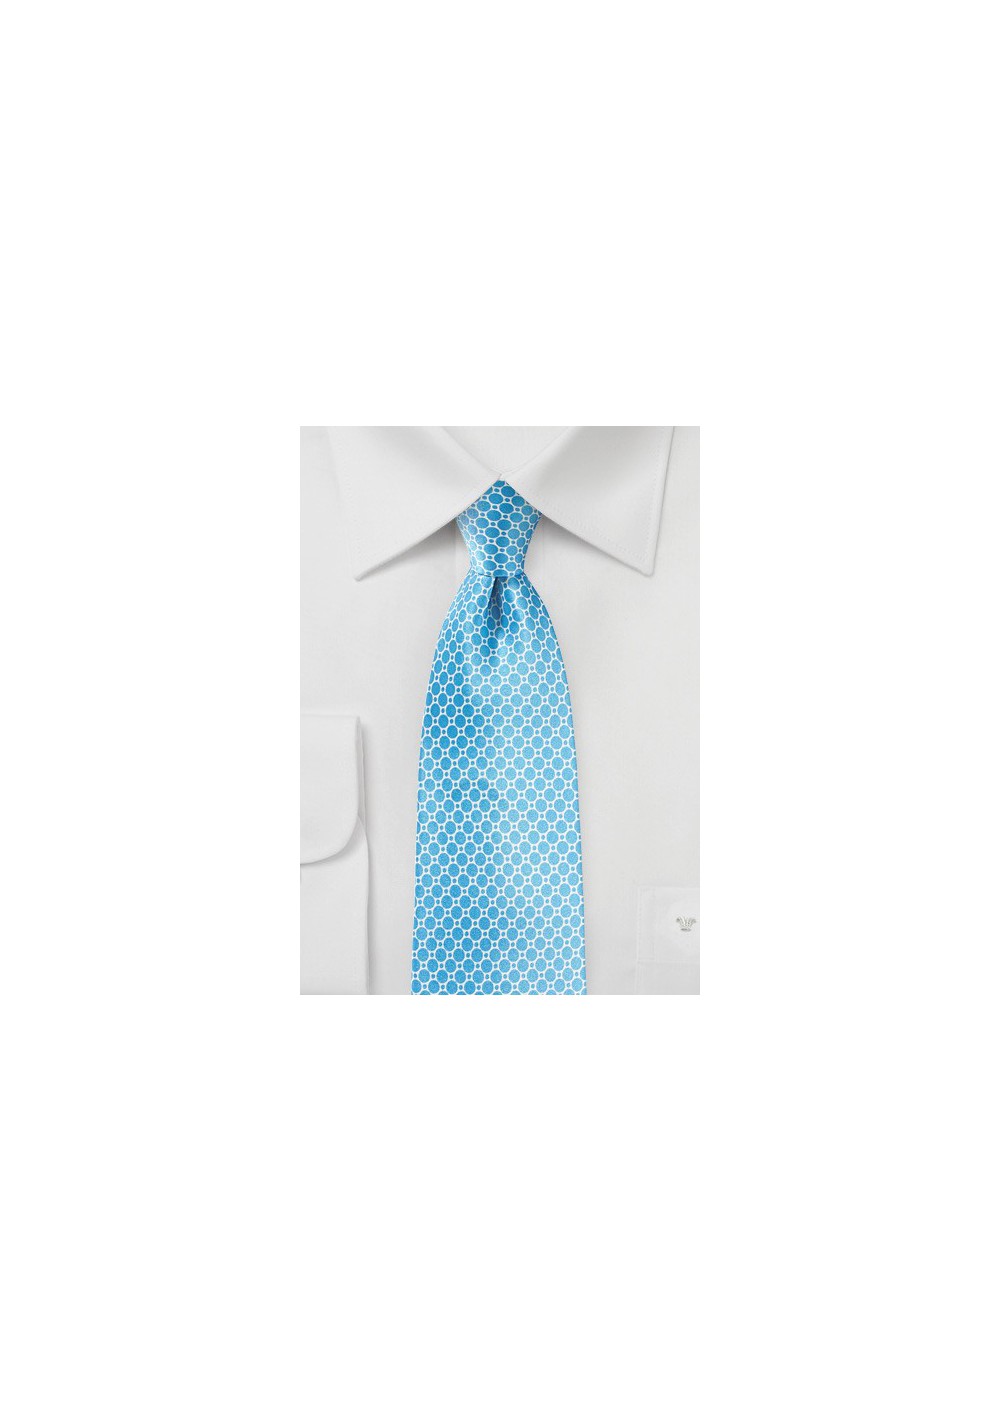 Silk Designer Tie in Tropical Blue